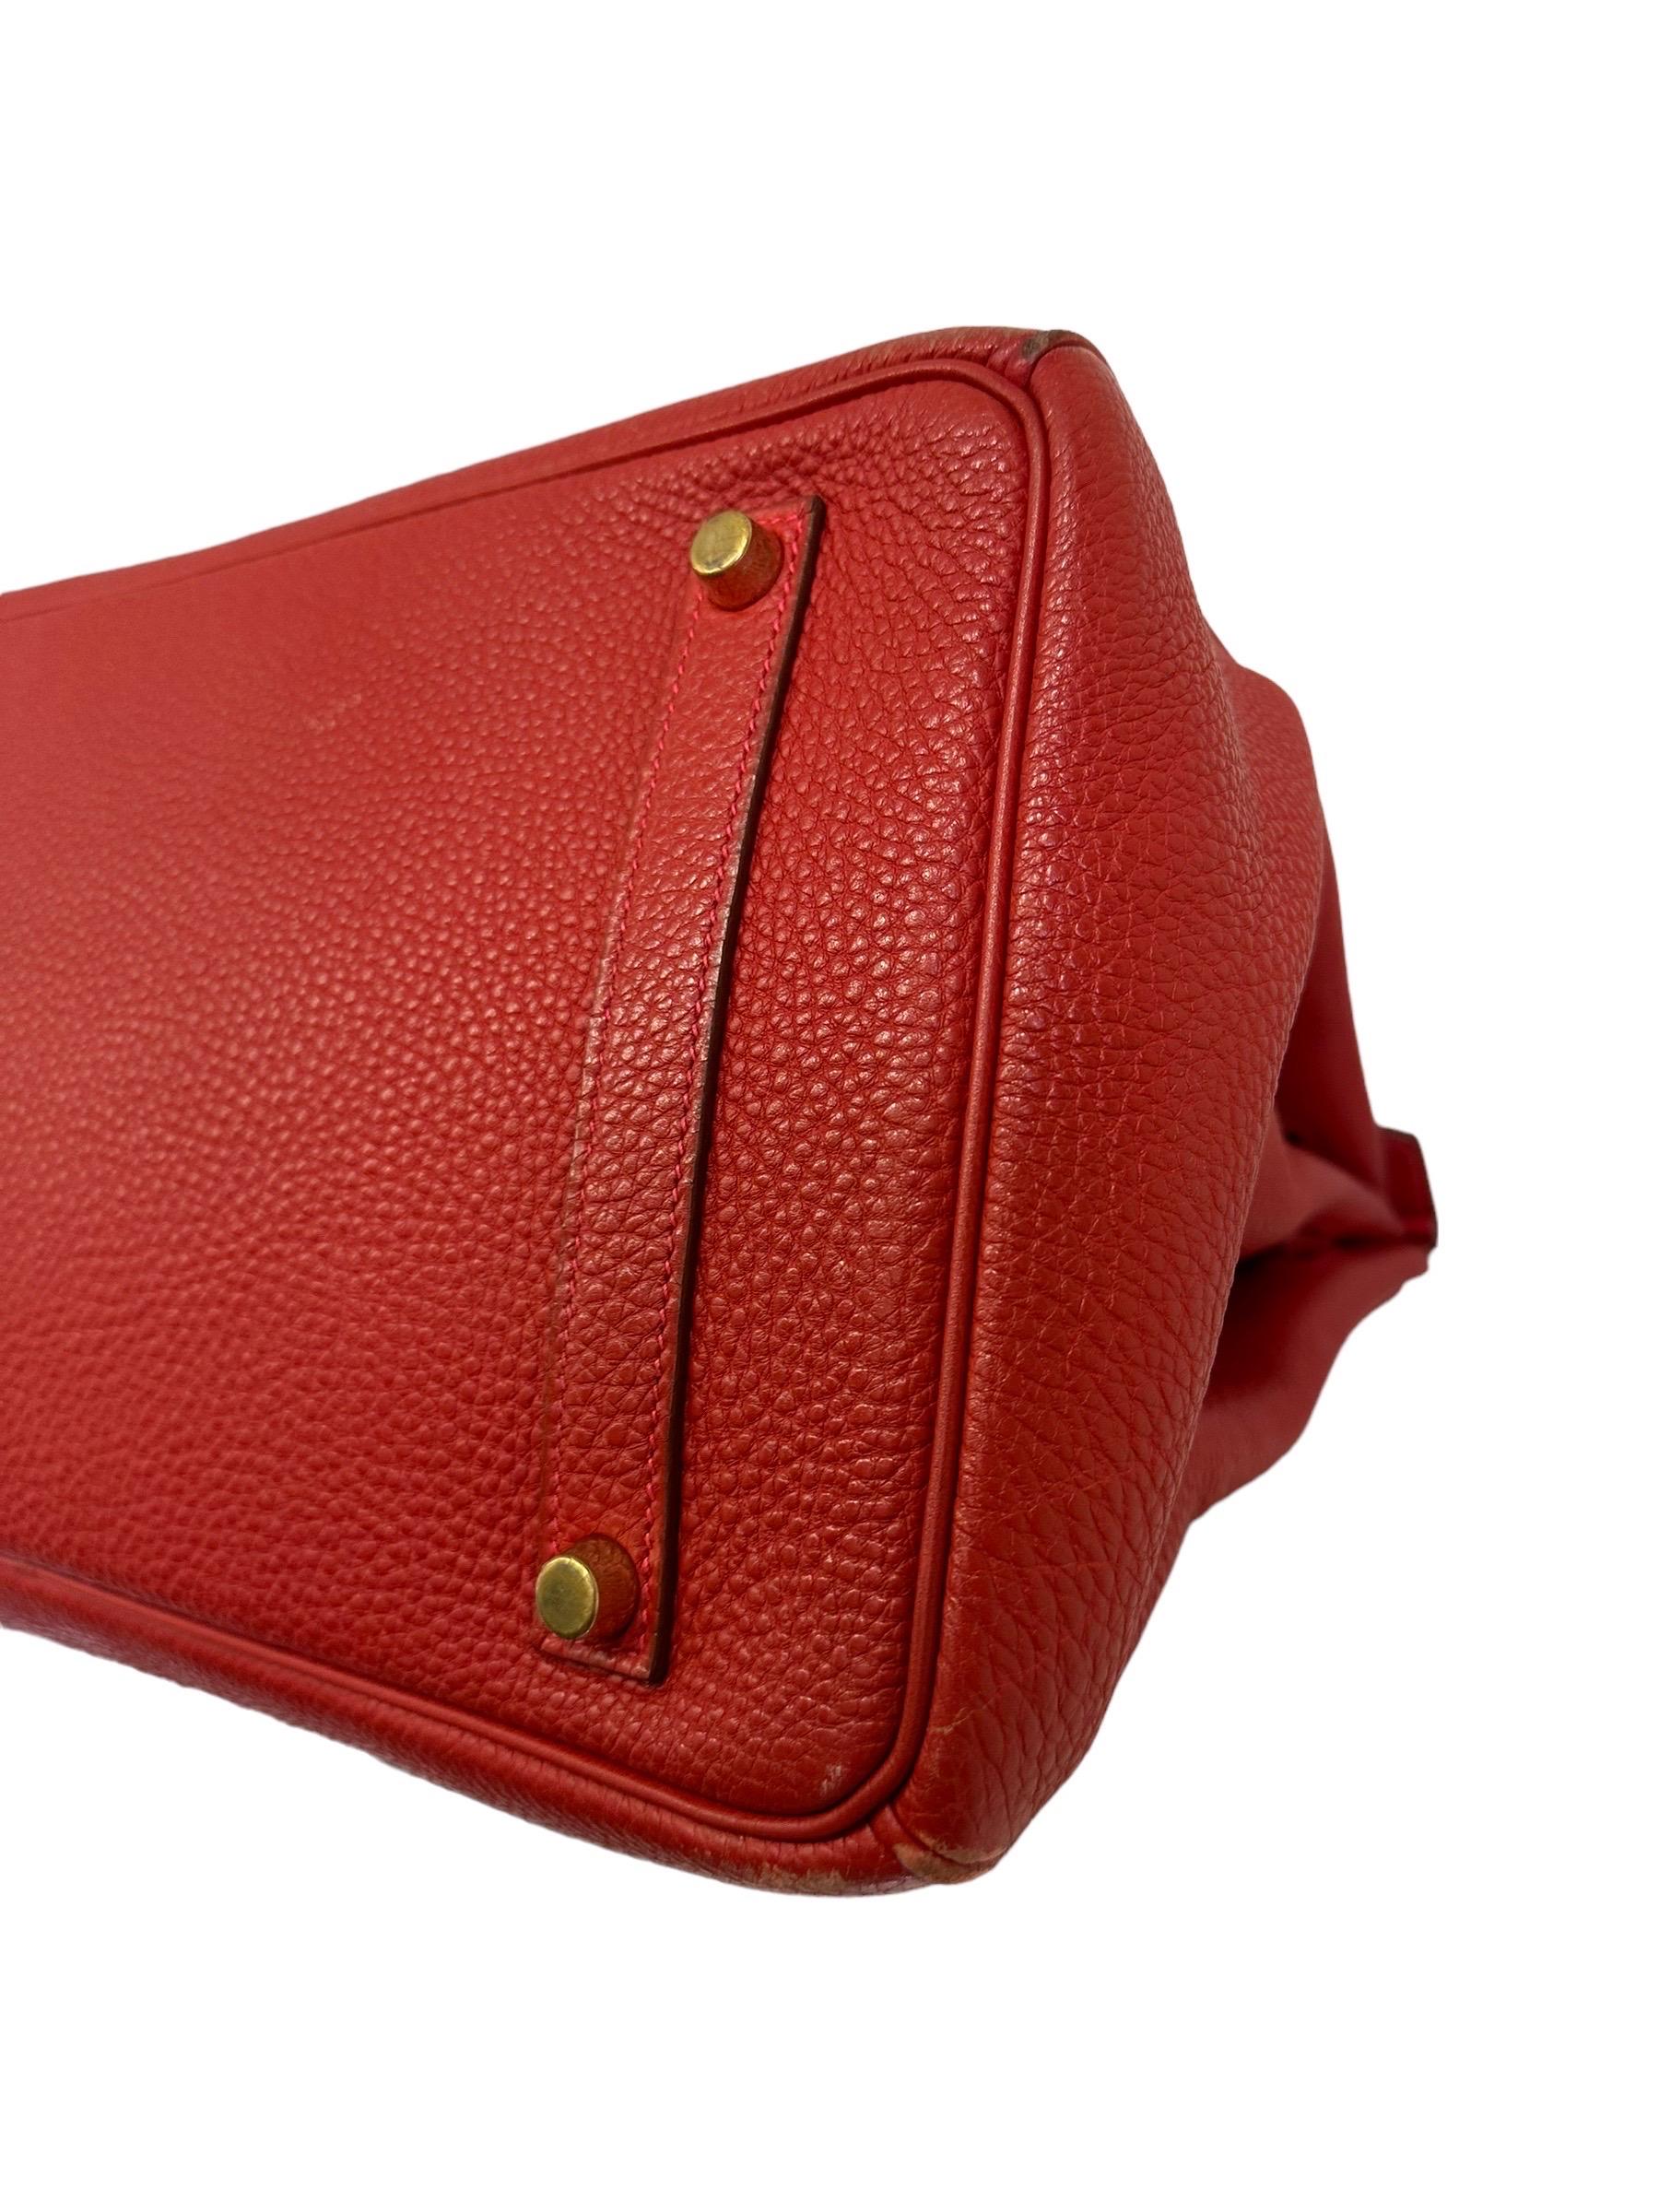 2004 Hermès Birkin 35 Fjord Leather Rouge Geranium Top Handle Bag  For Sale 7